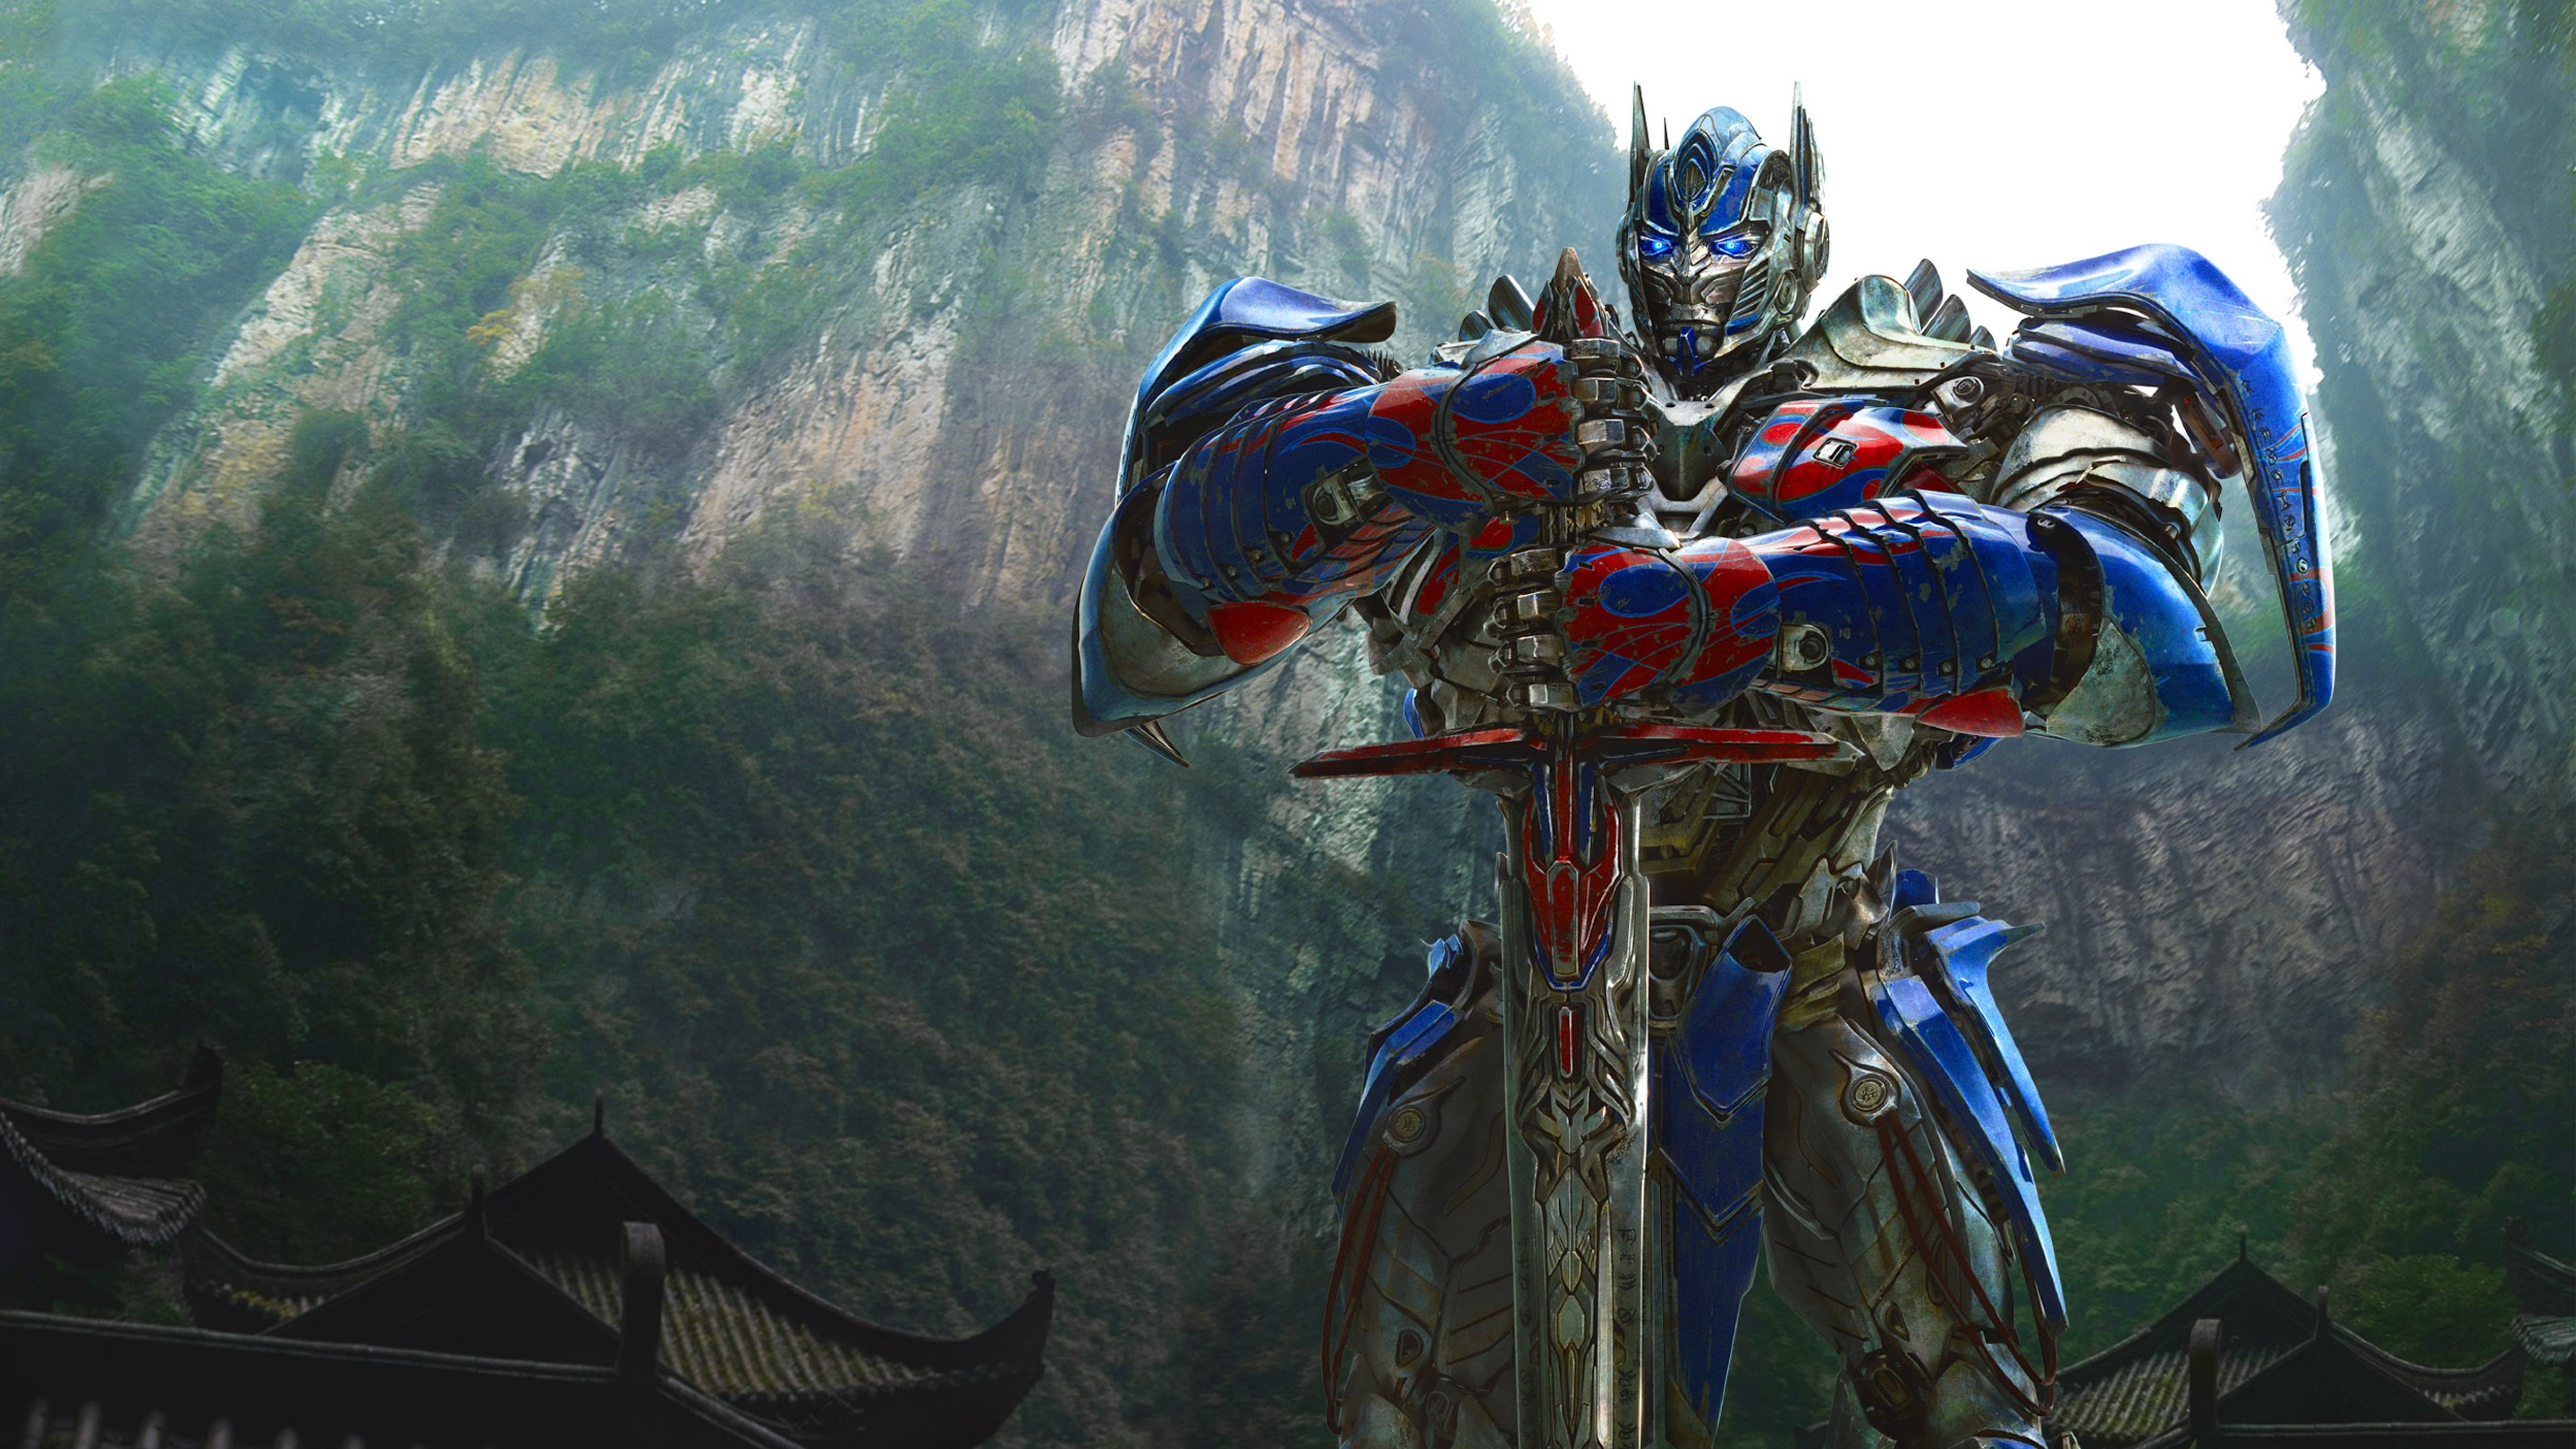 optimus prime hd wallpaper,transformers,vehicle,screenshot,extreme sport,fictional character